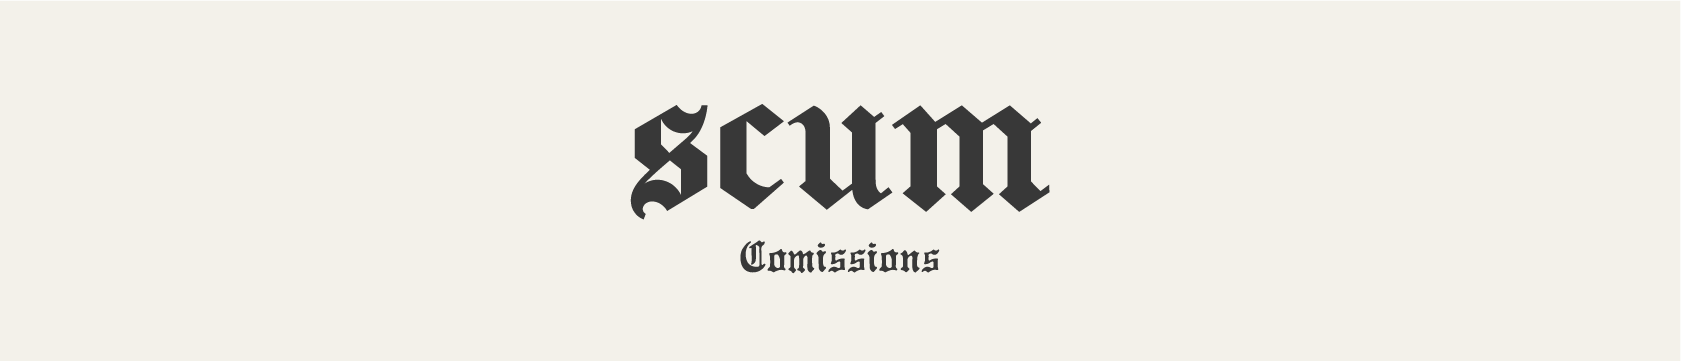 Scum's Comissions banner